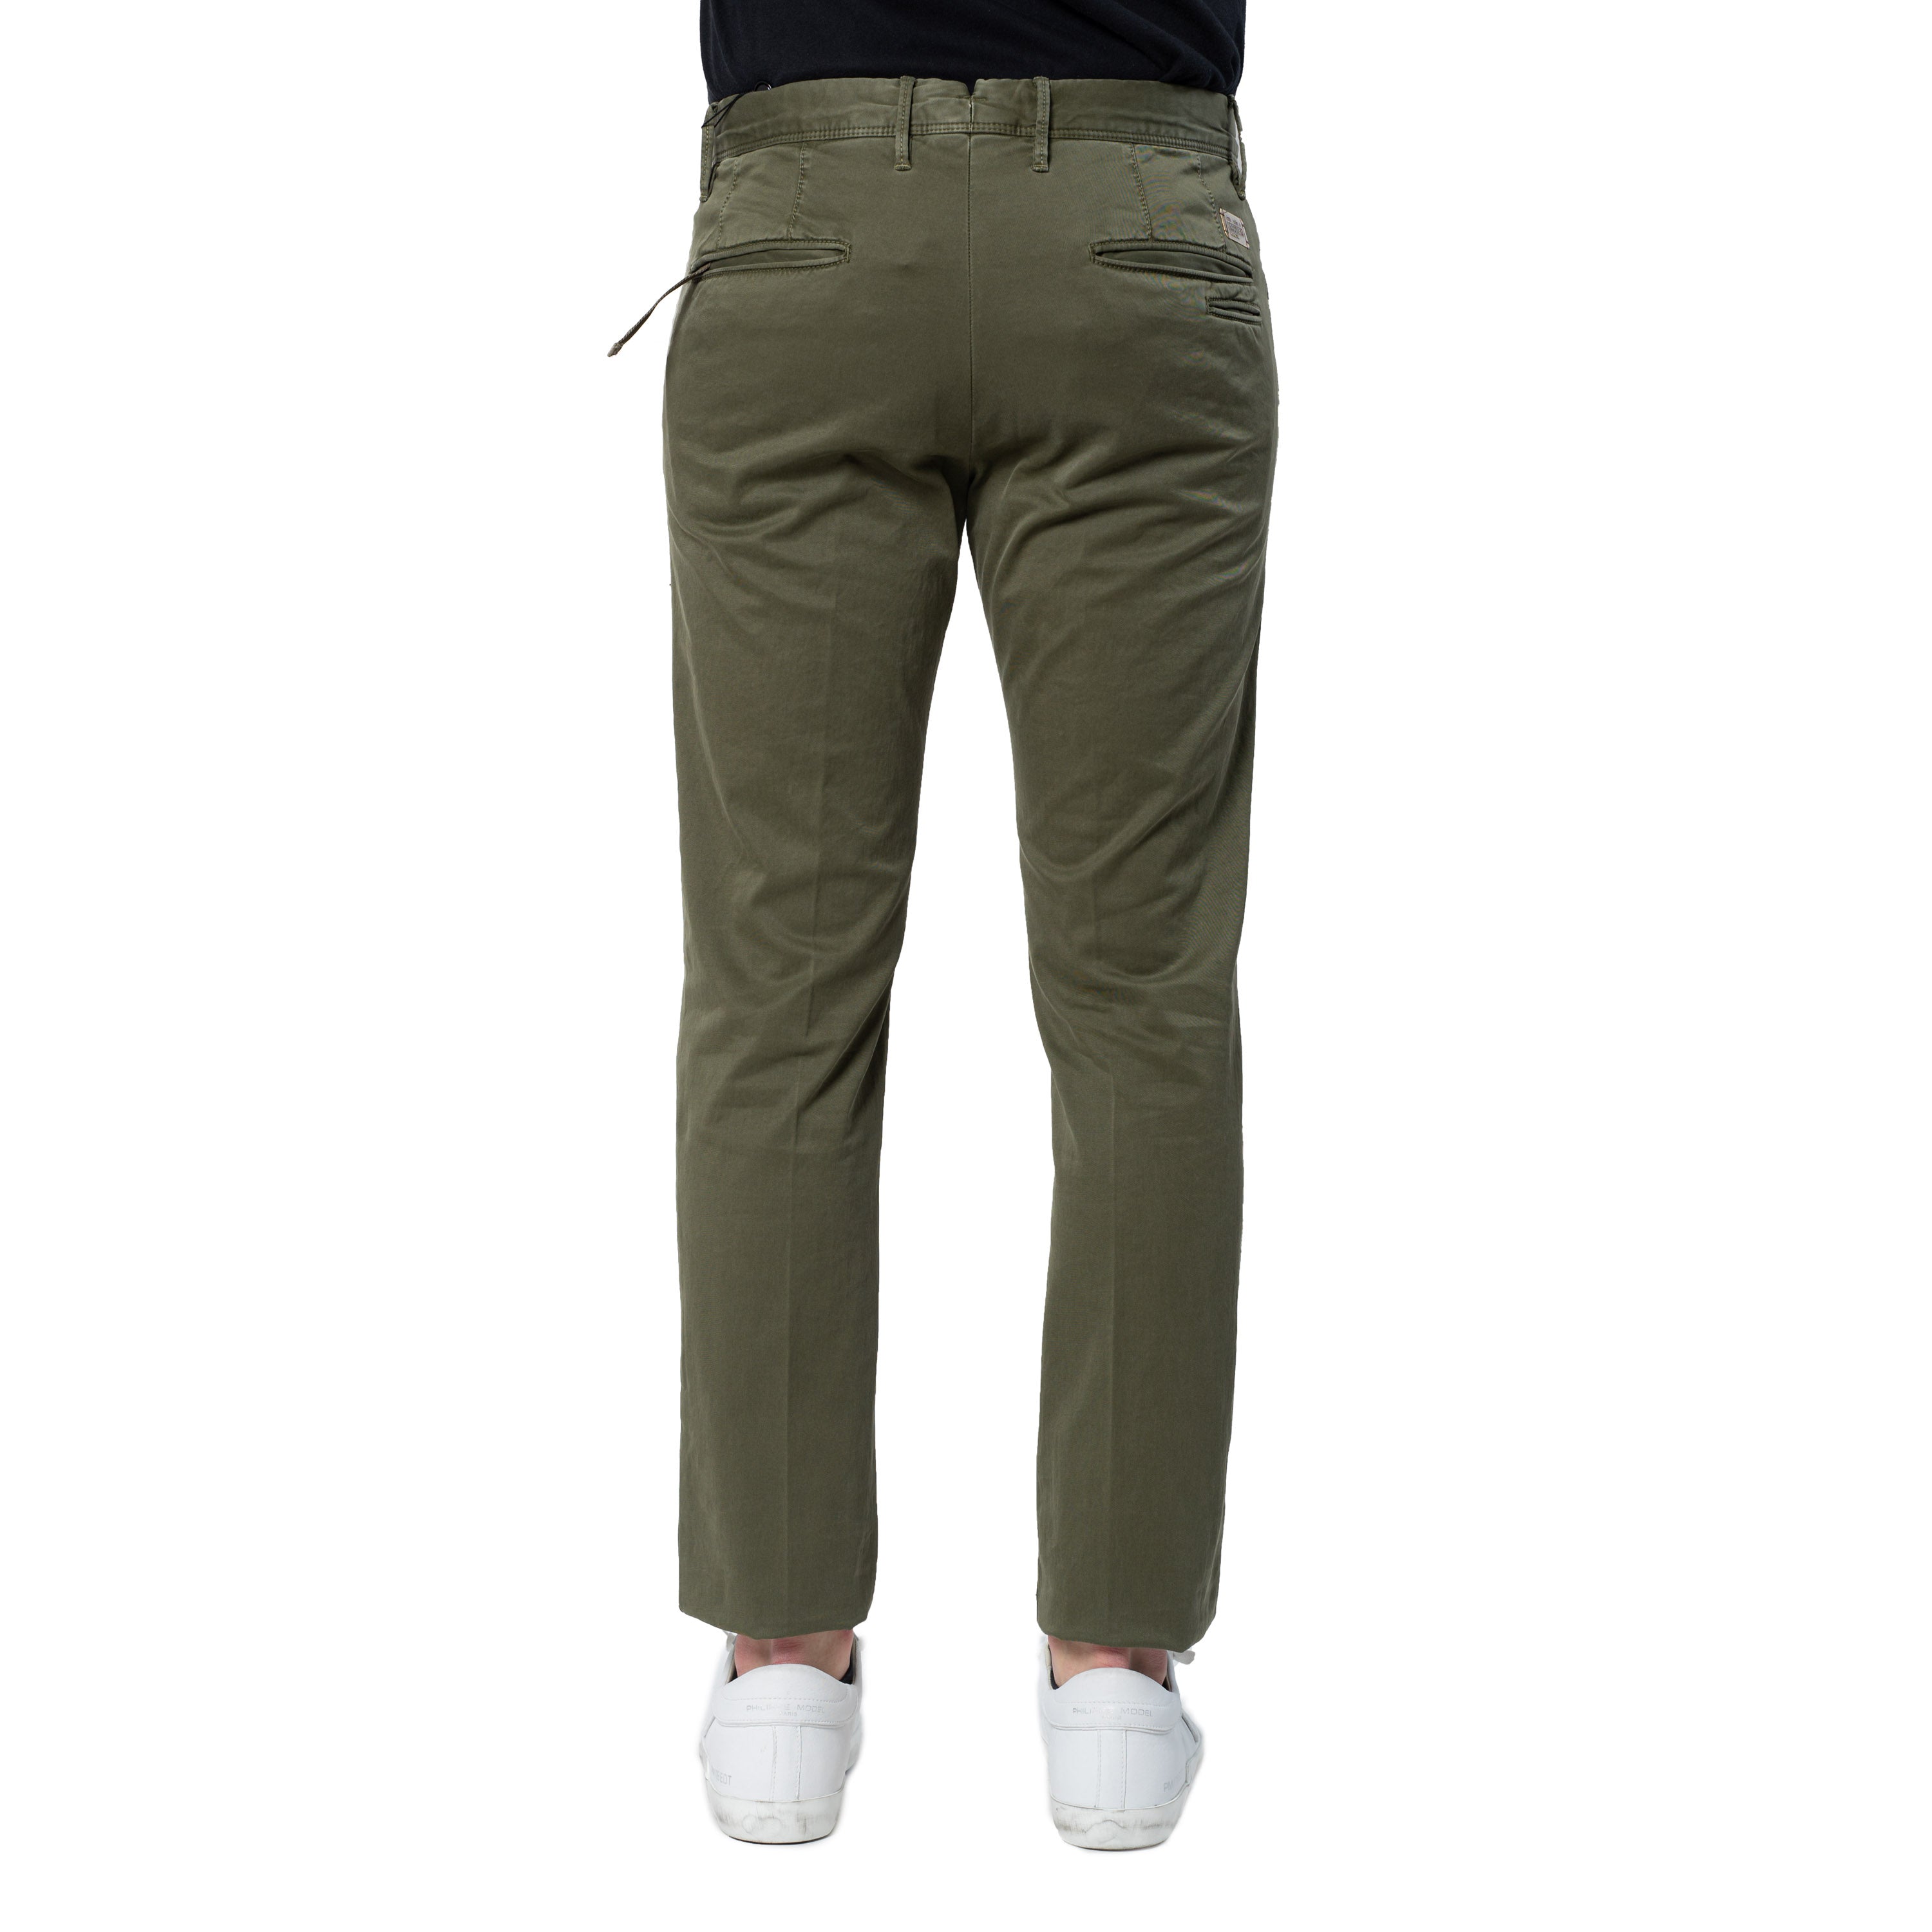 Pantalone INCOTEX 741 12S103-90664 Verde militare - Avant-gardeandria